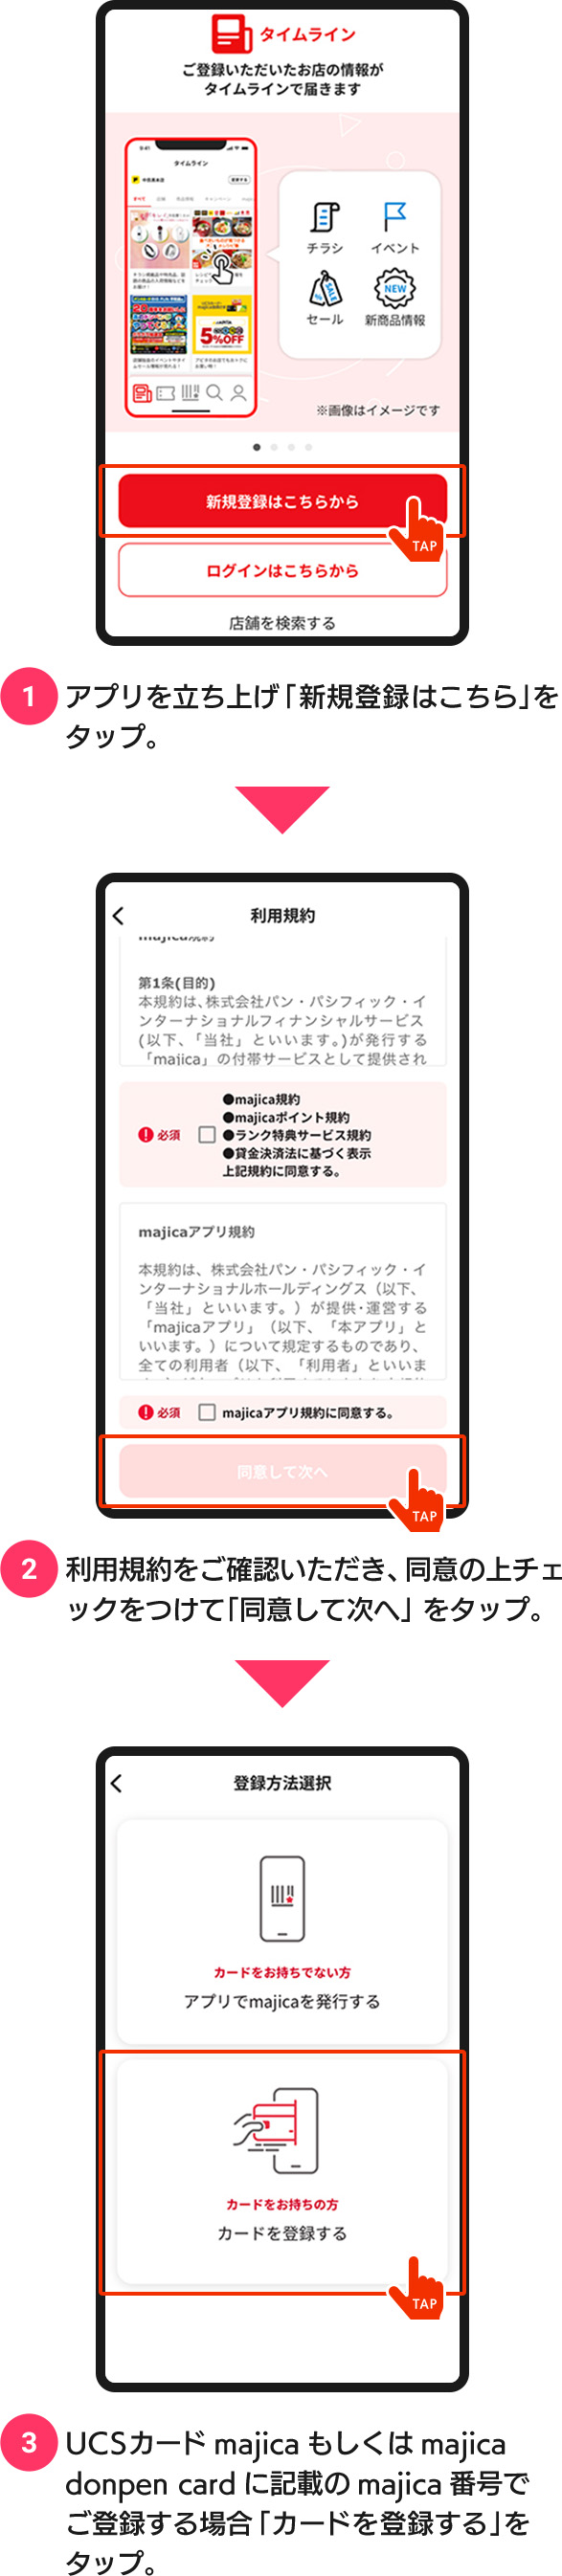 majicaアプリ登録画面